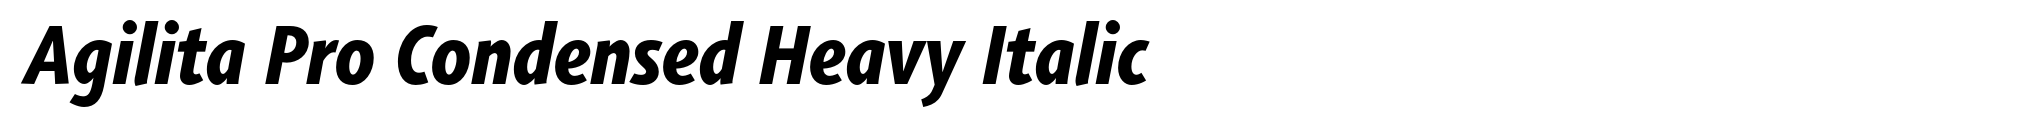 Agilita Pro Condensed Heavy Italic image